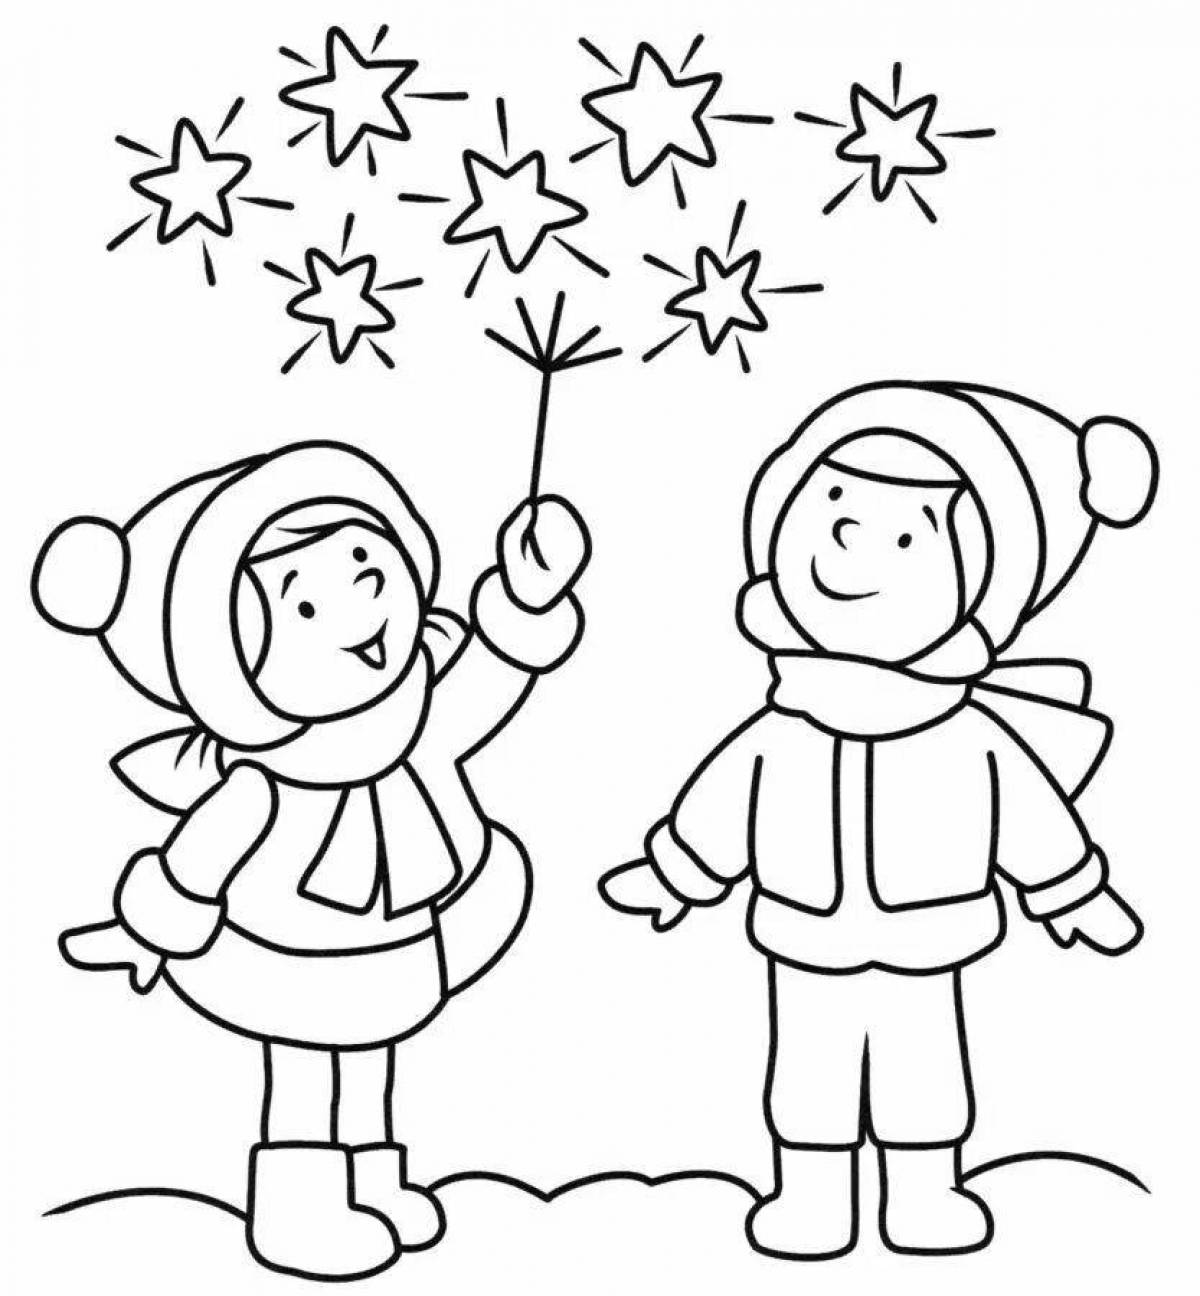 Joyful holiday coloring page